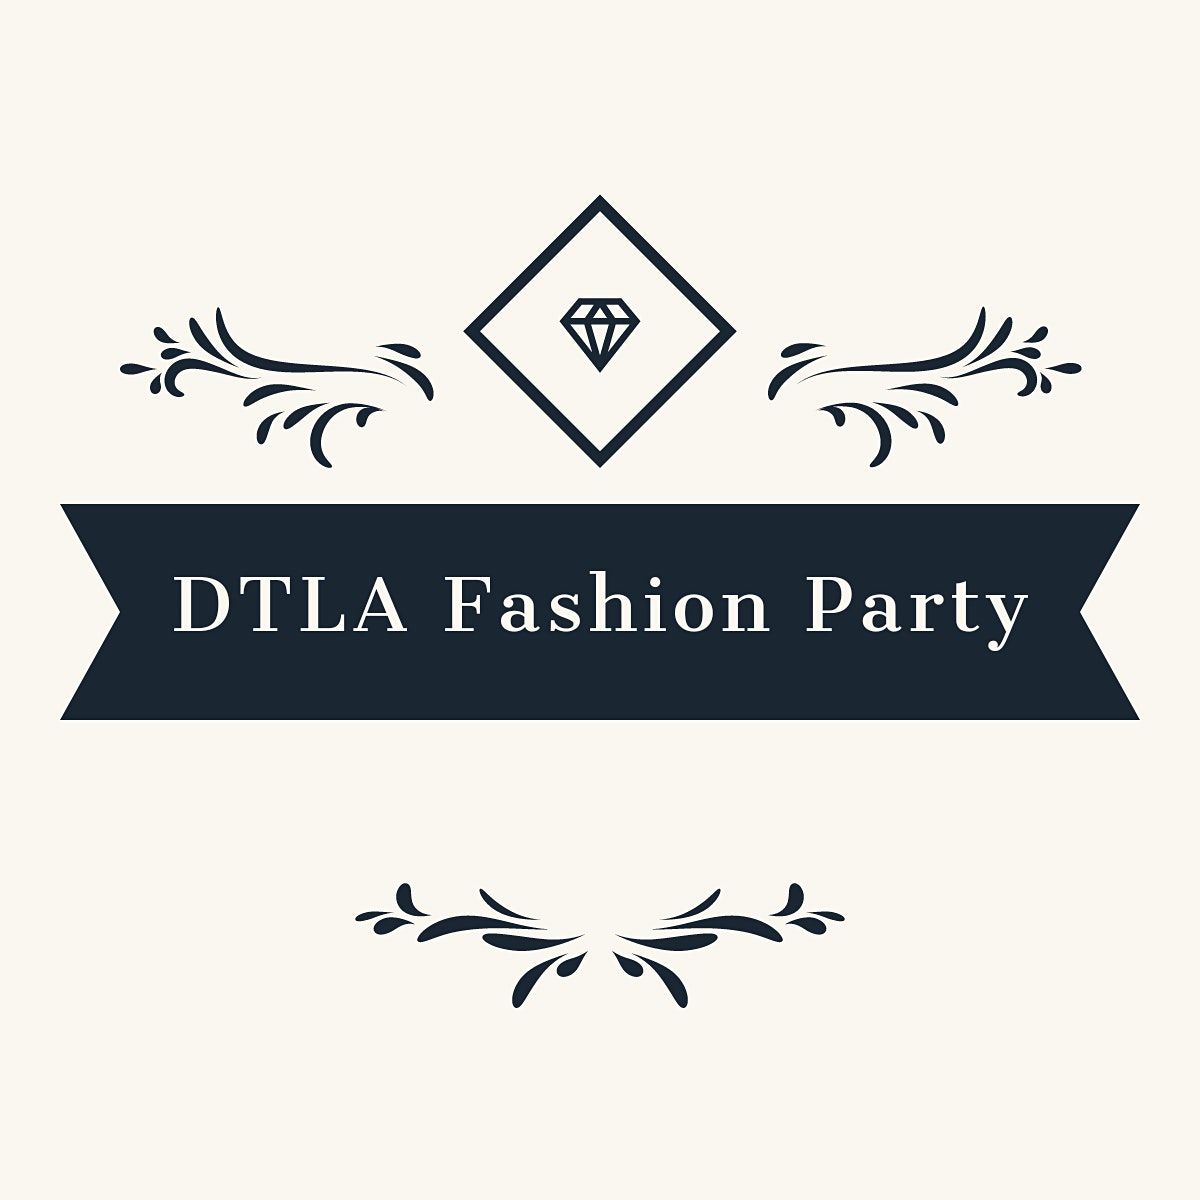 DTLA Fashion Party